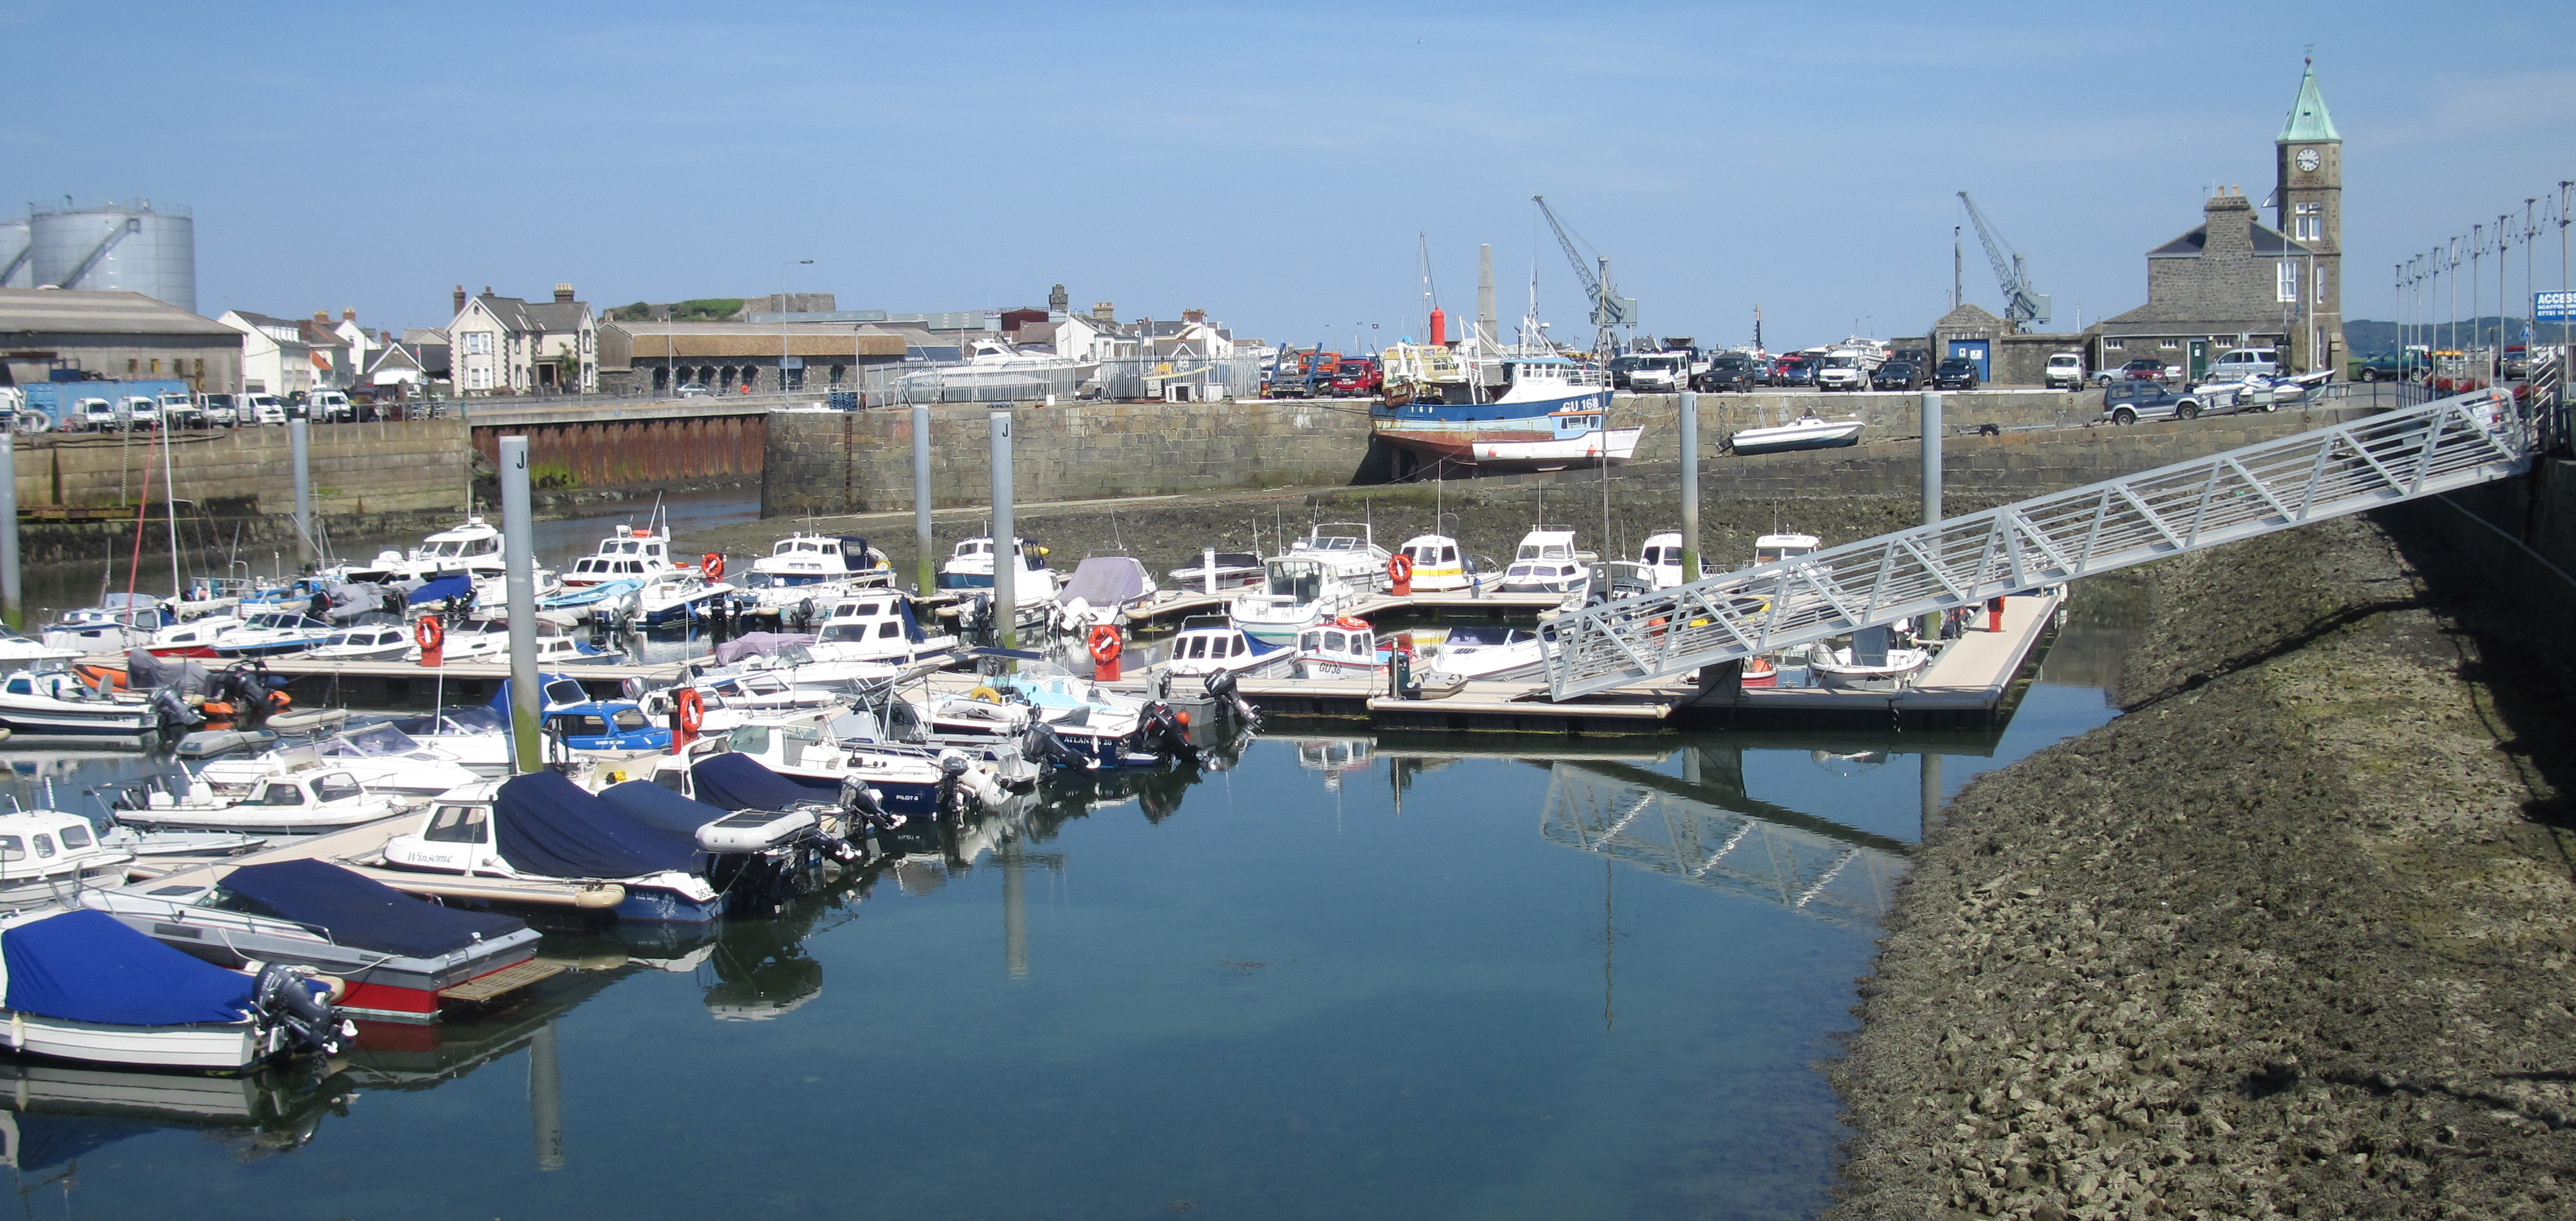 File:Guernsey July 2011 276, Saint Sampson harbour.jpg - Wikipedia